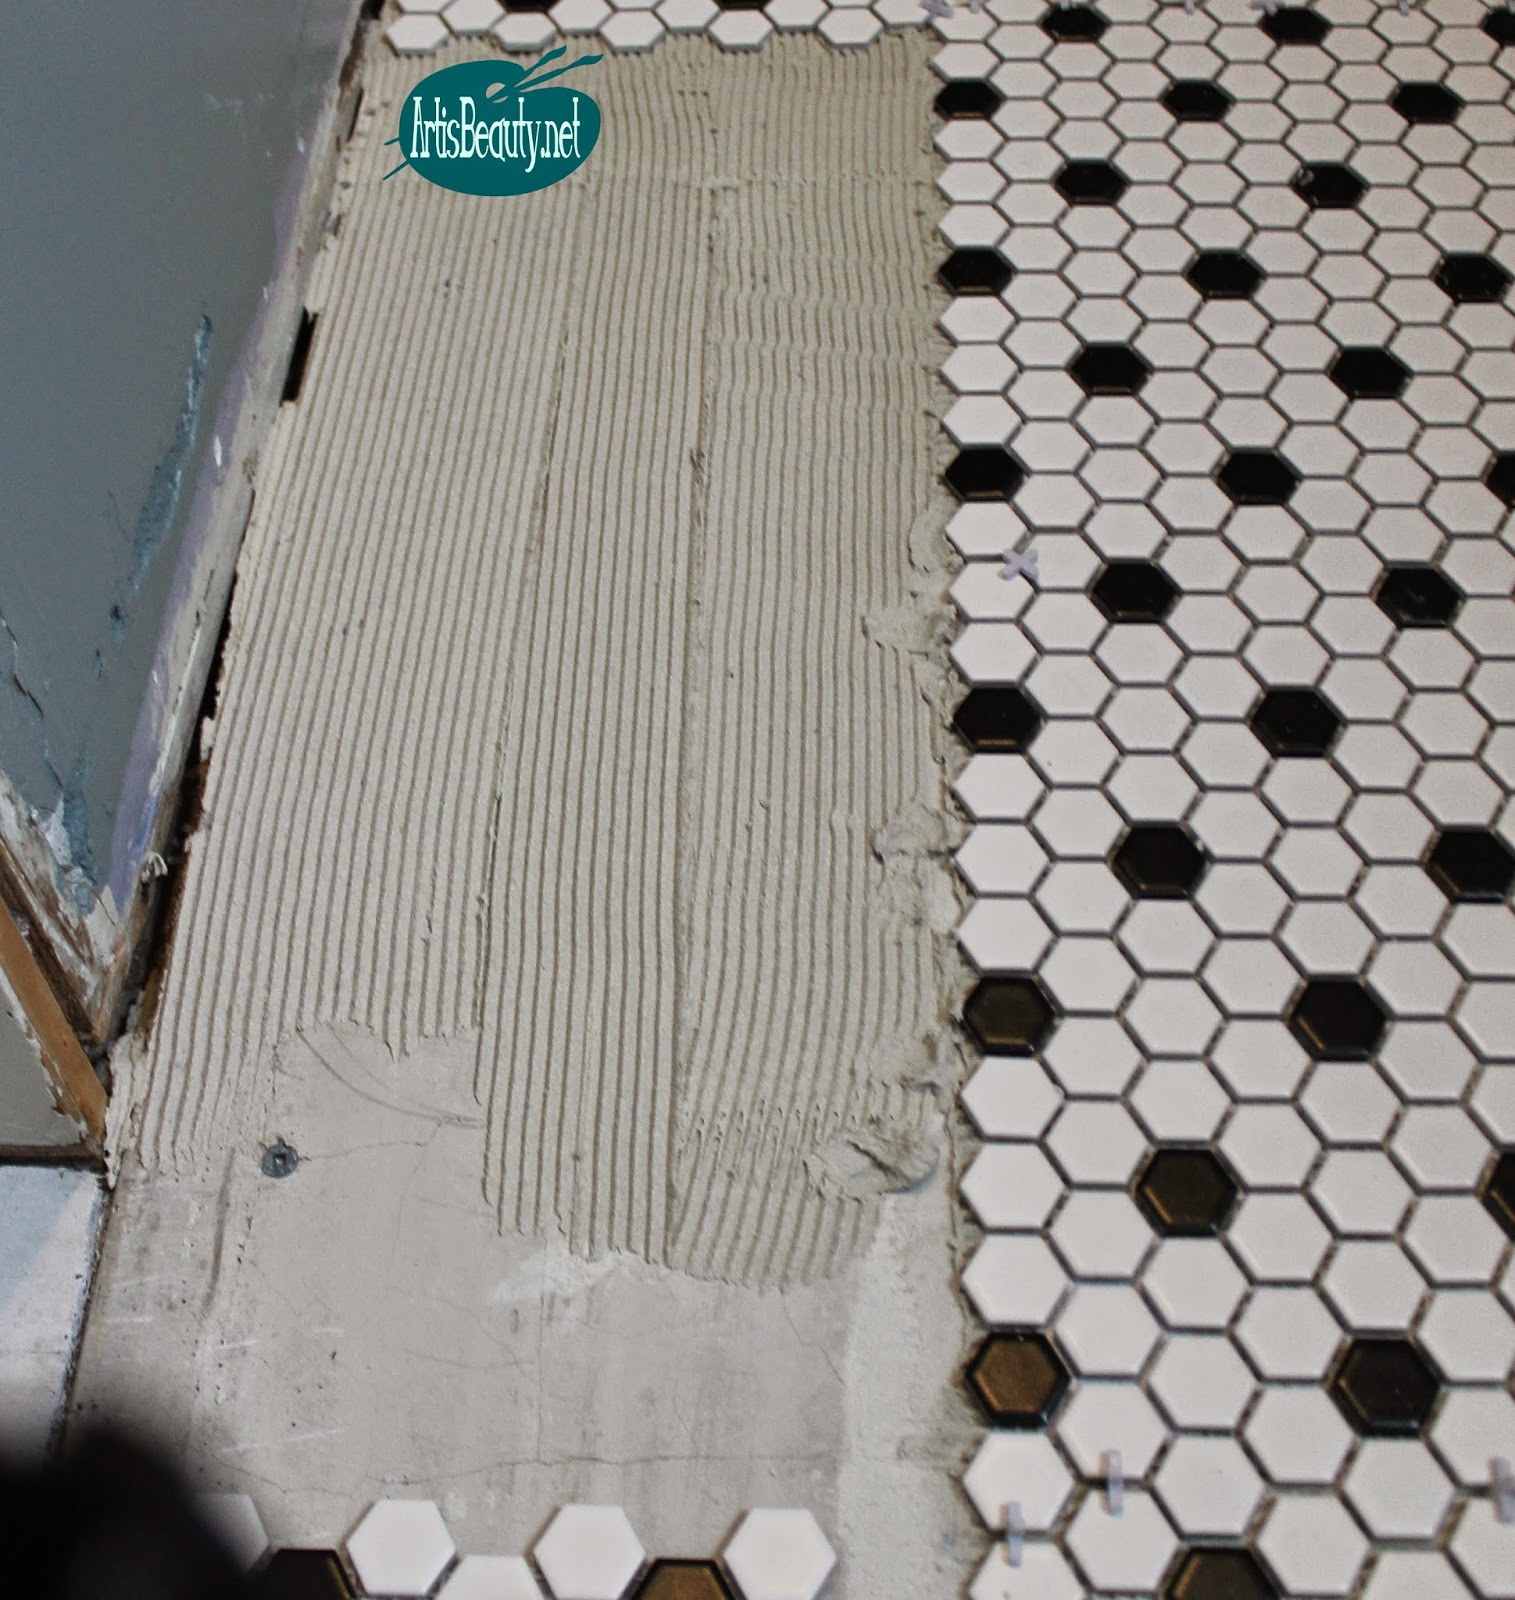 hexagon tiles bathroom makeover artisbeauty.net flooring tile tiling mortar